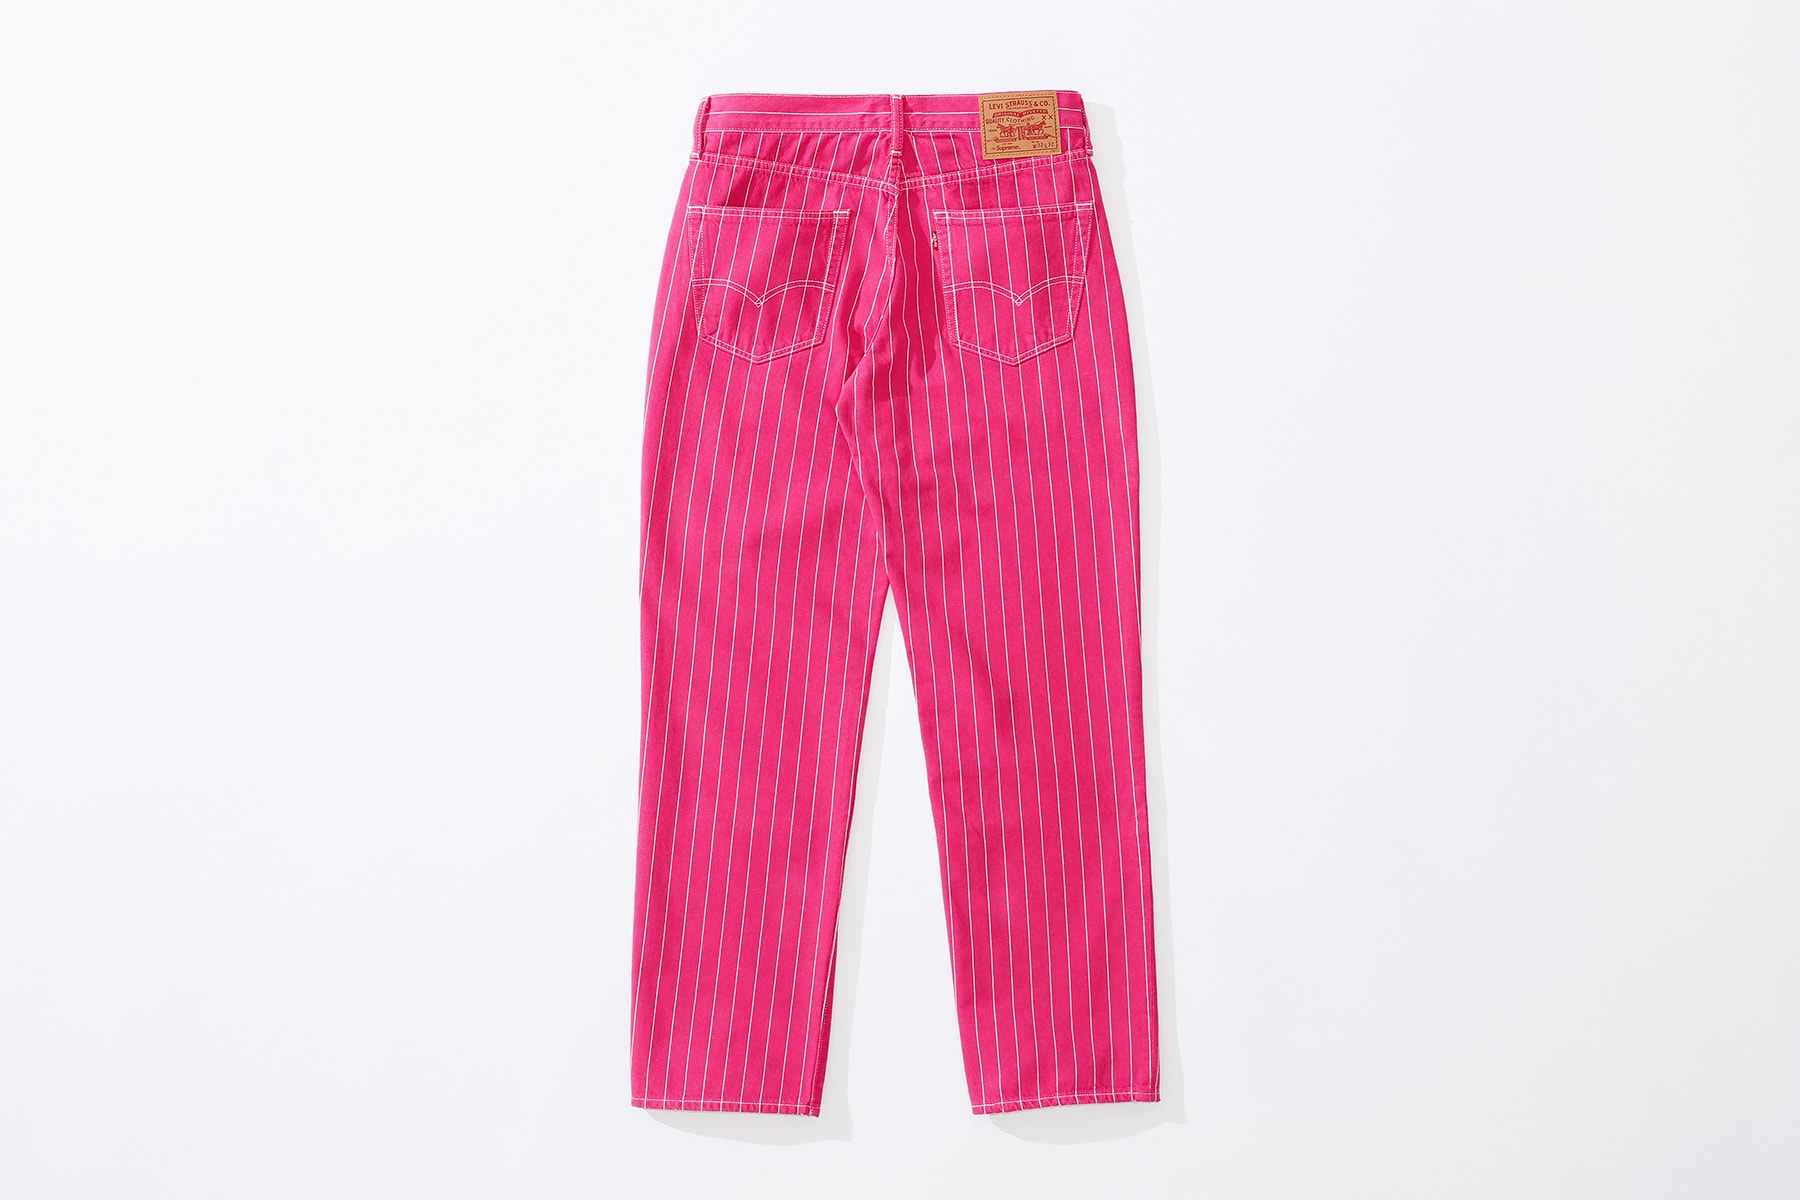 supreme levi's spring 2018 denim collection pink white pinstripe stonewashed 550 jeans